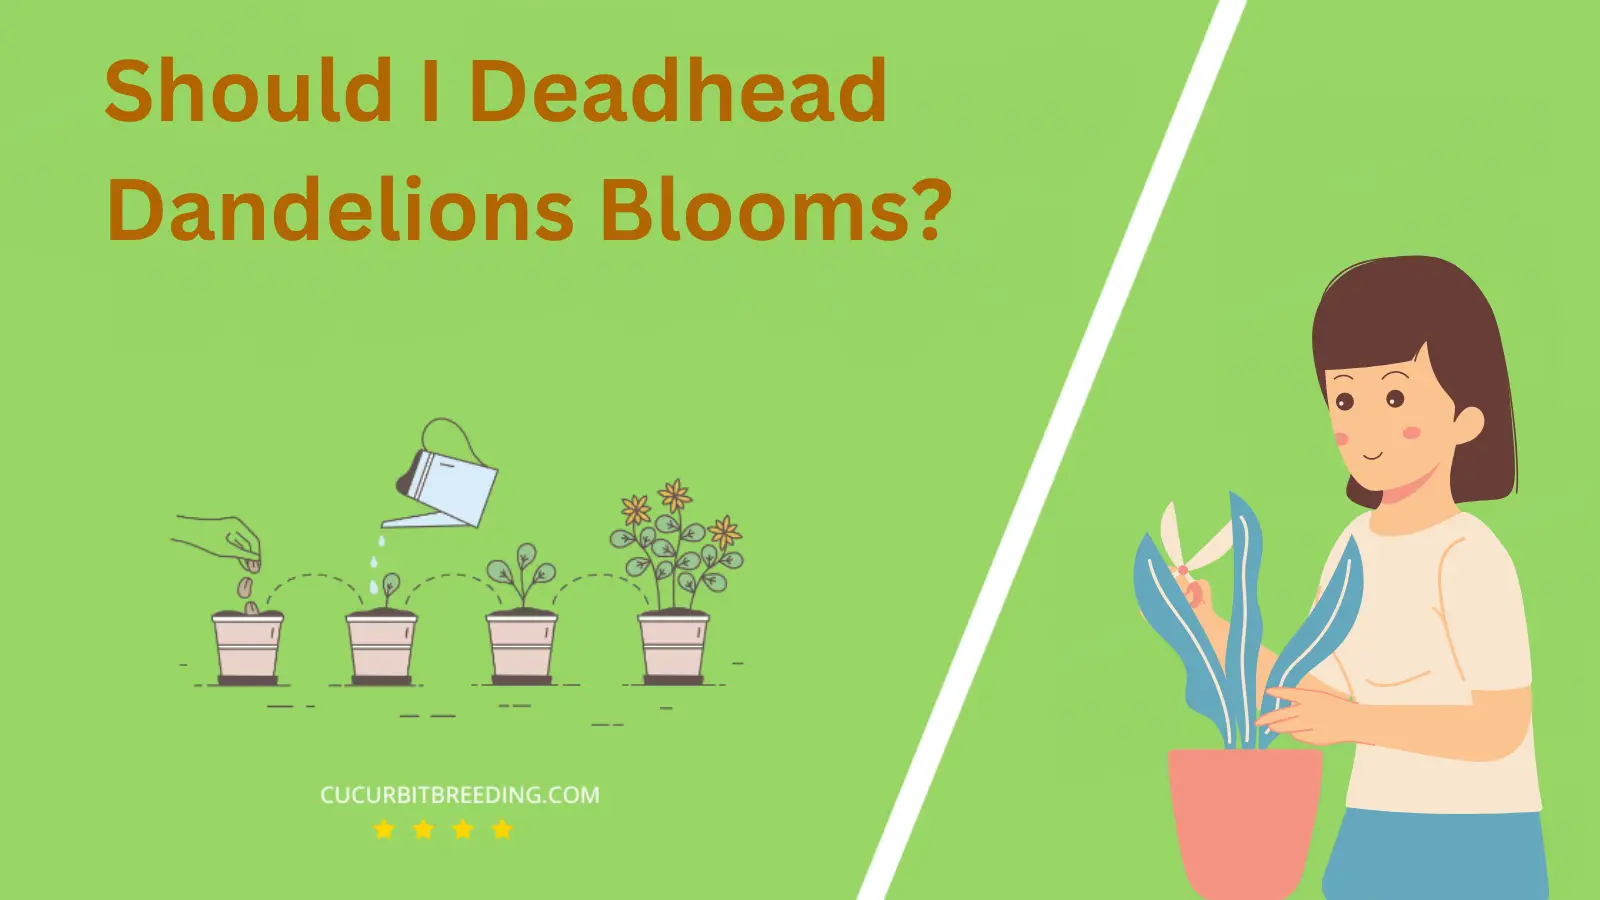 Should I Deadhead Dandelions Blooms?